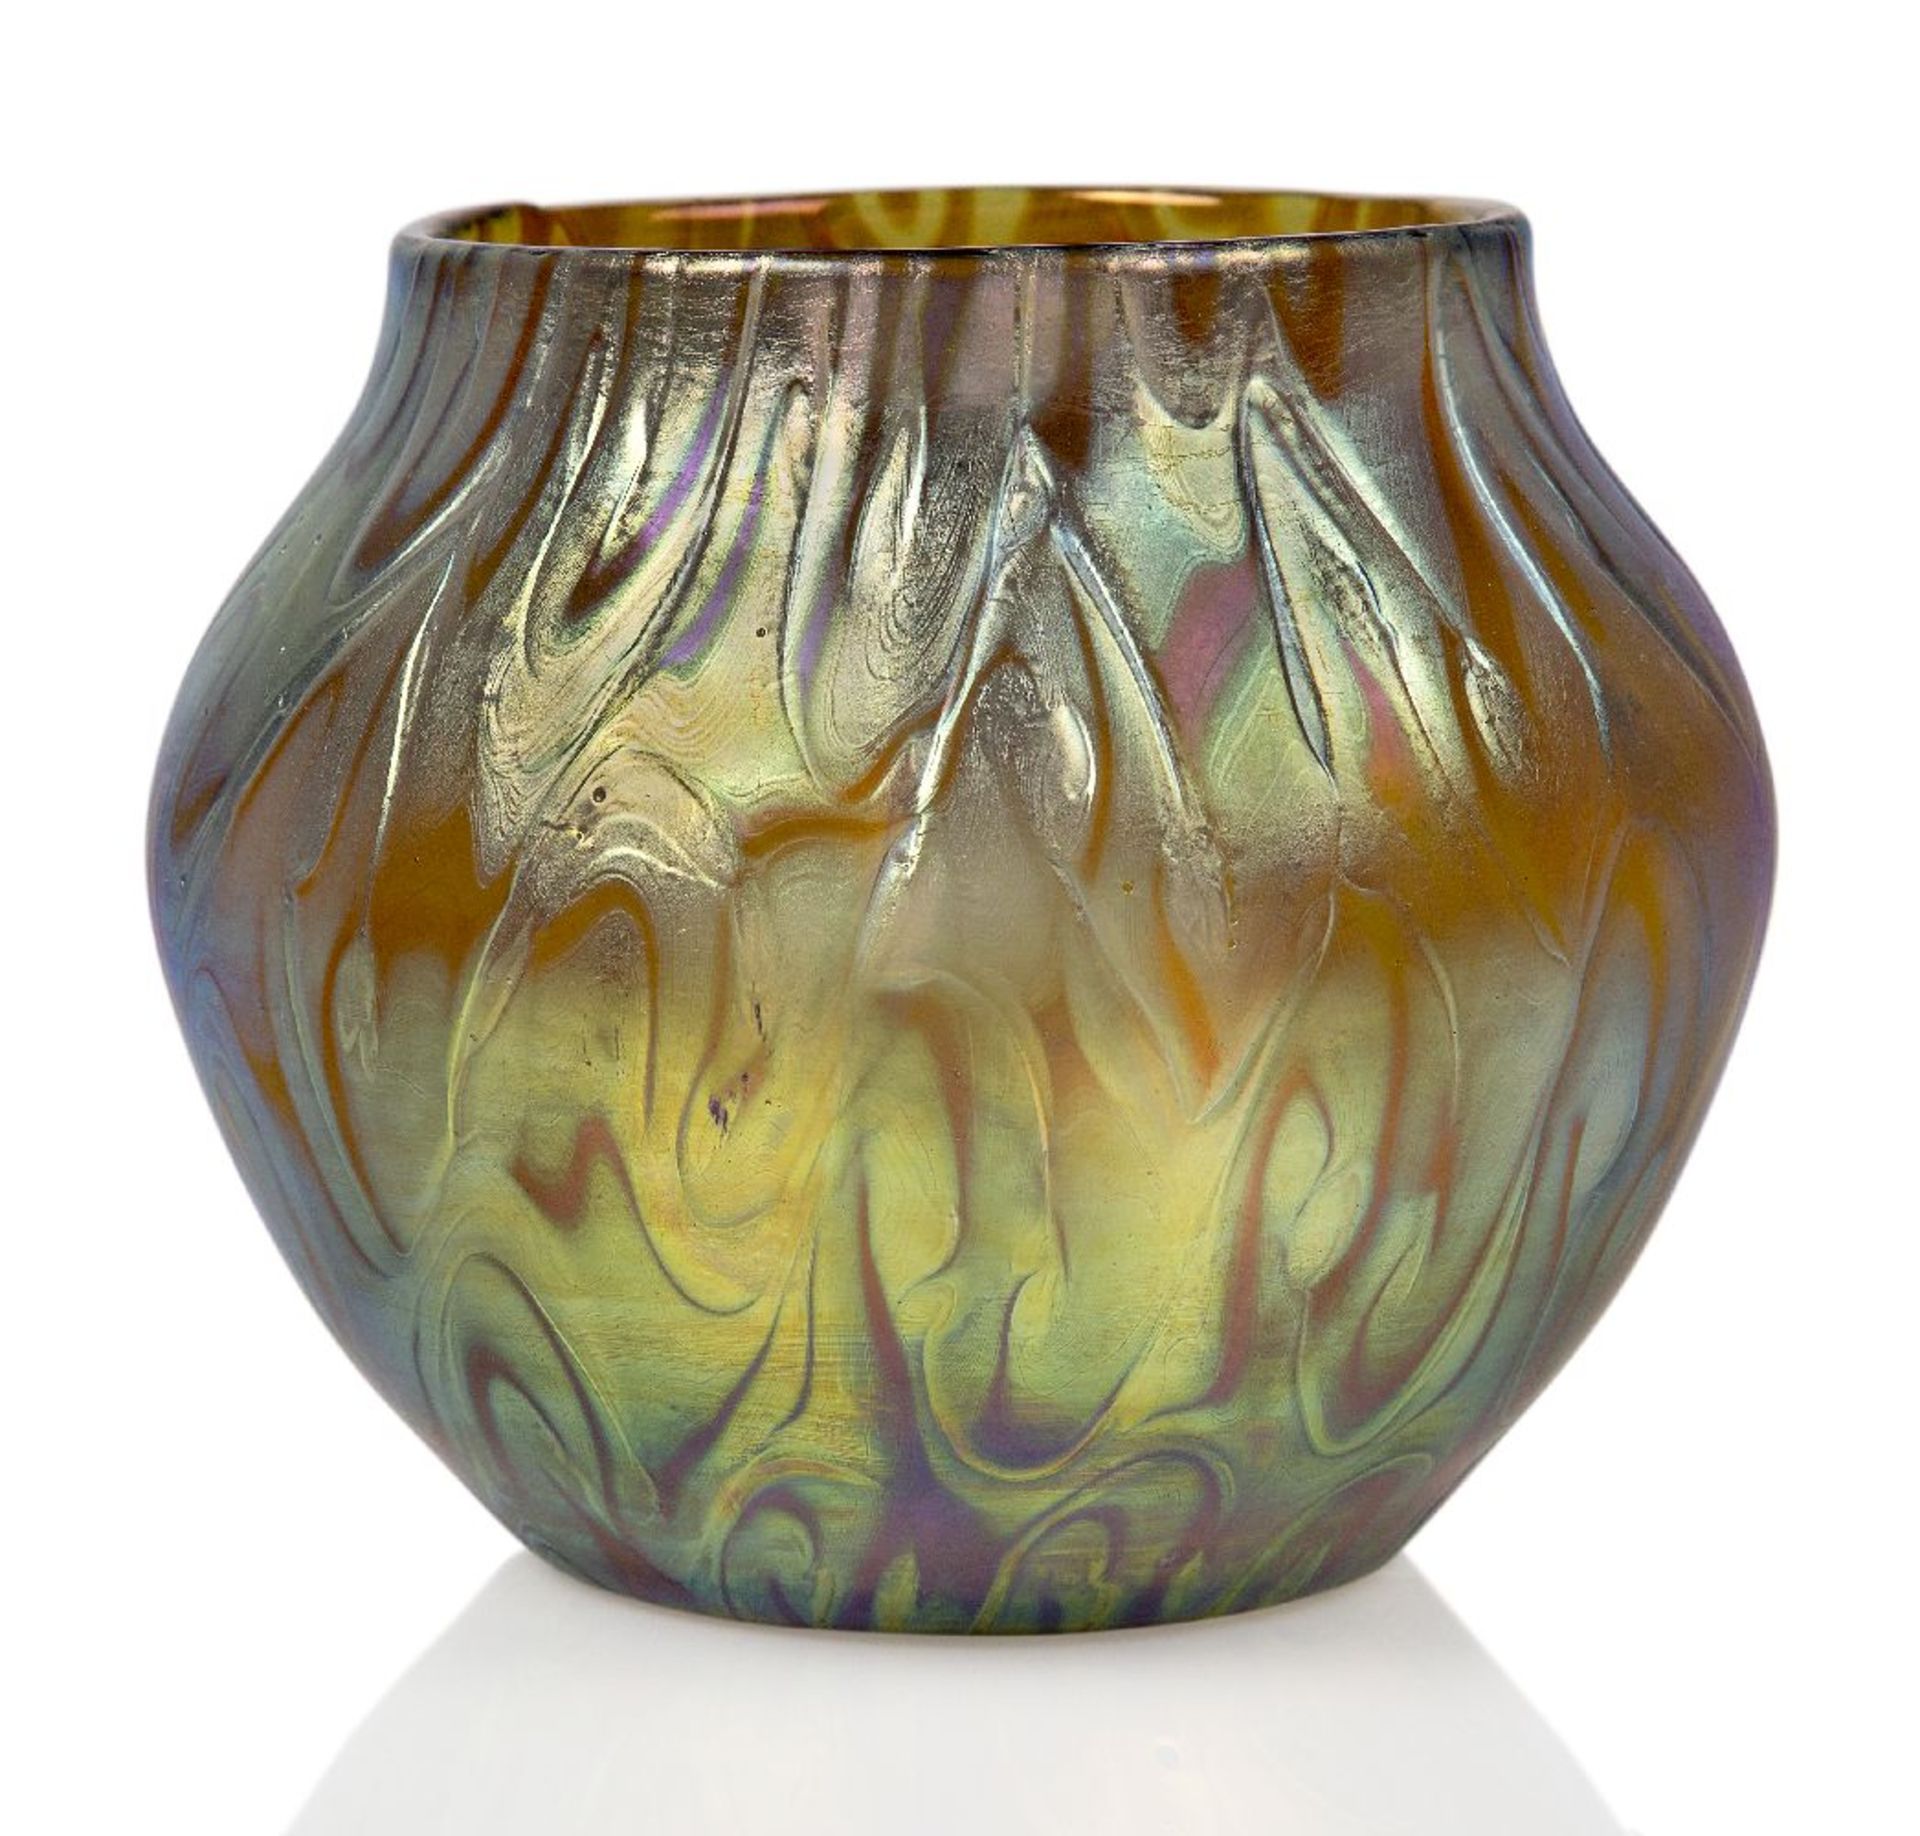 Loetz (Austrian), an iridescent Phaenomen glass vase, c.1898, PG 7499-1, ground out pontil